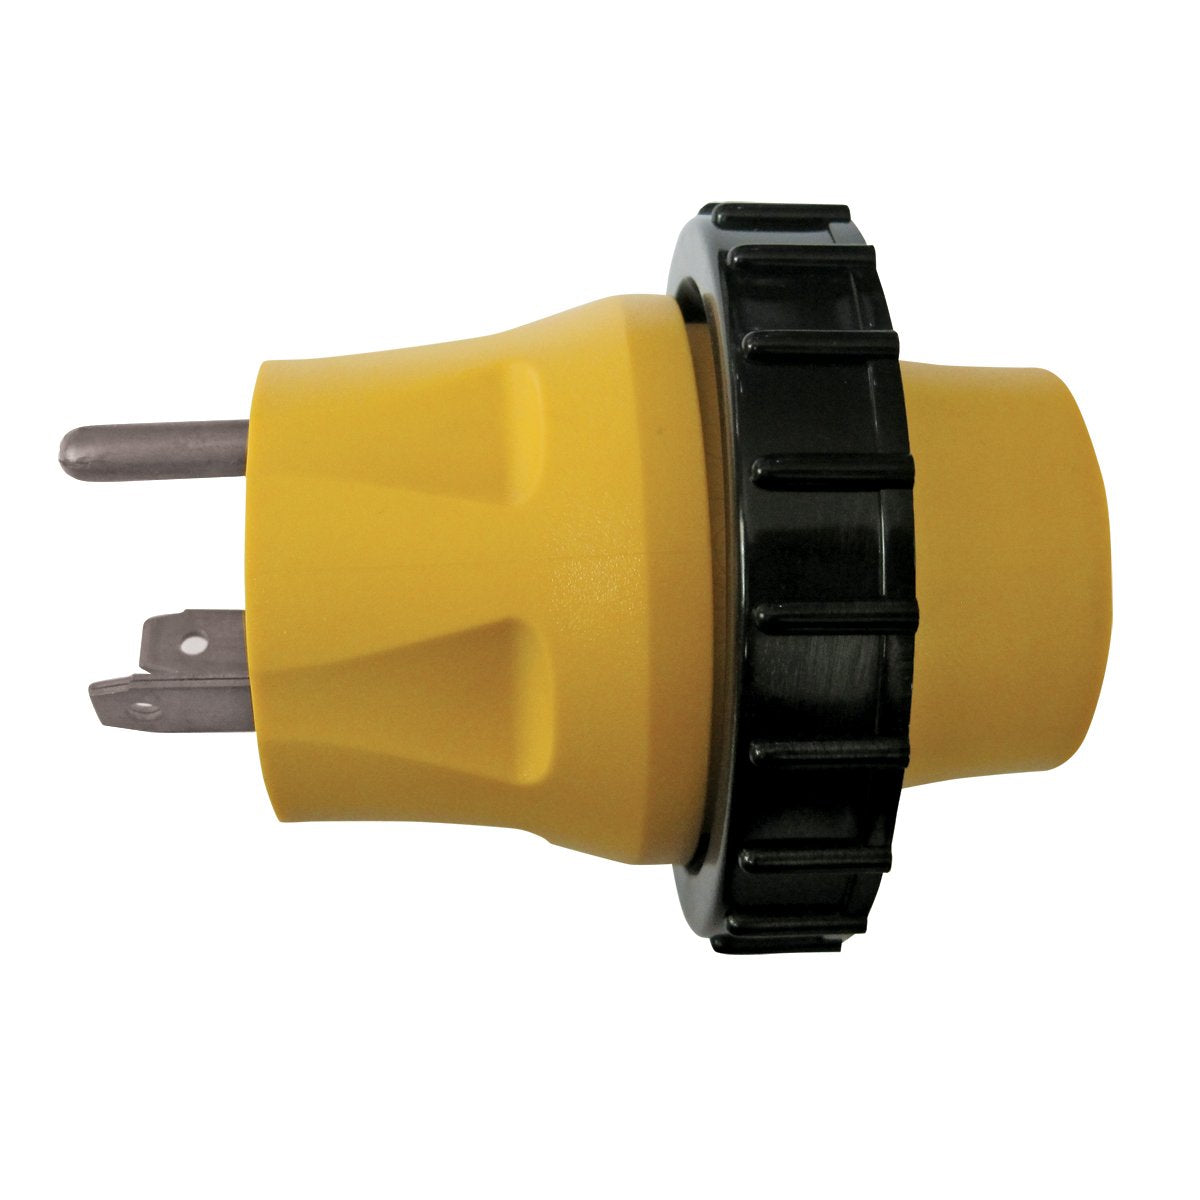 Voltec Industries 16-00595 30-30 Locking Adapter